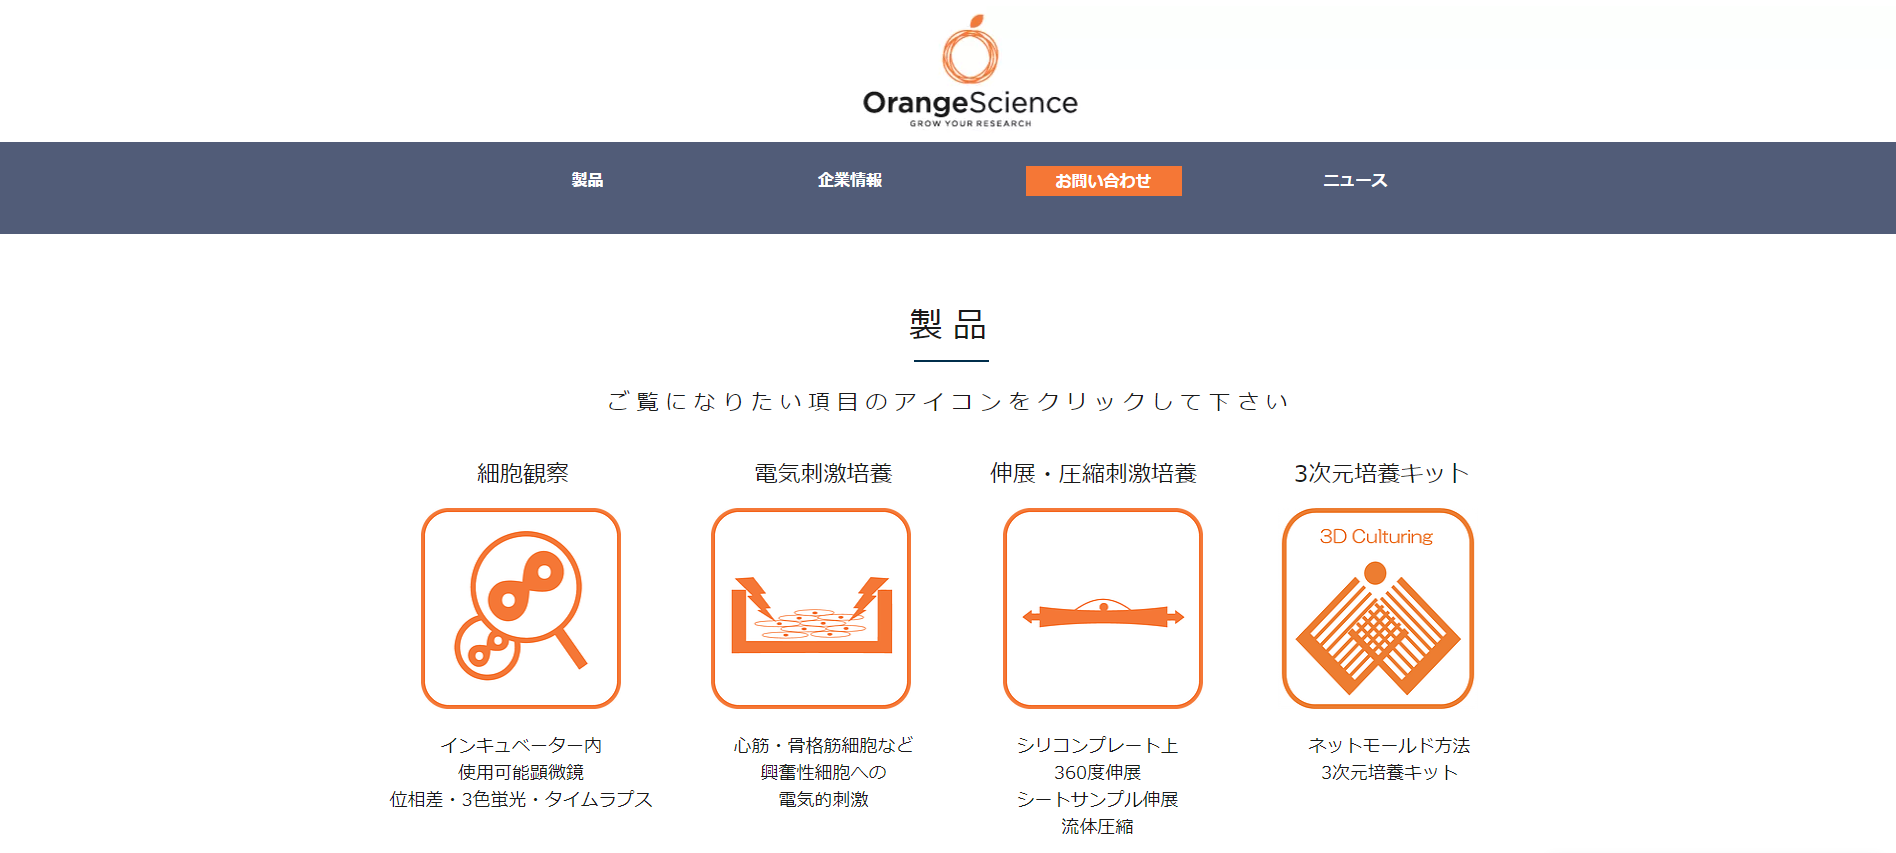 Japanese content marketing healthcare equipment company